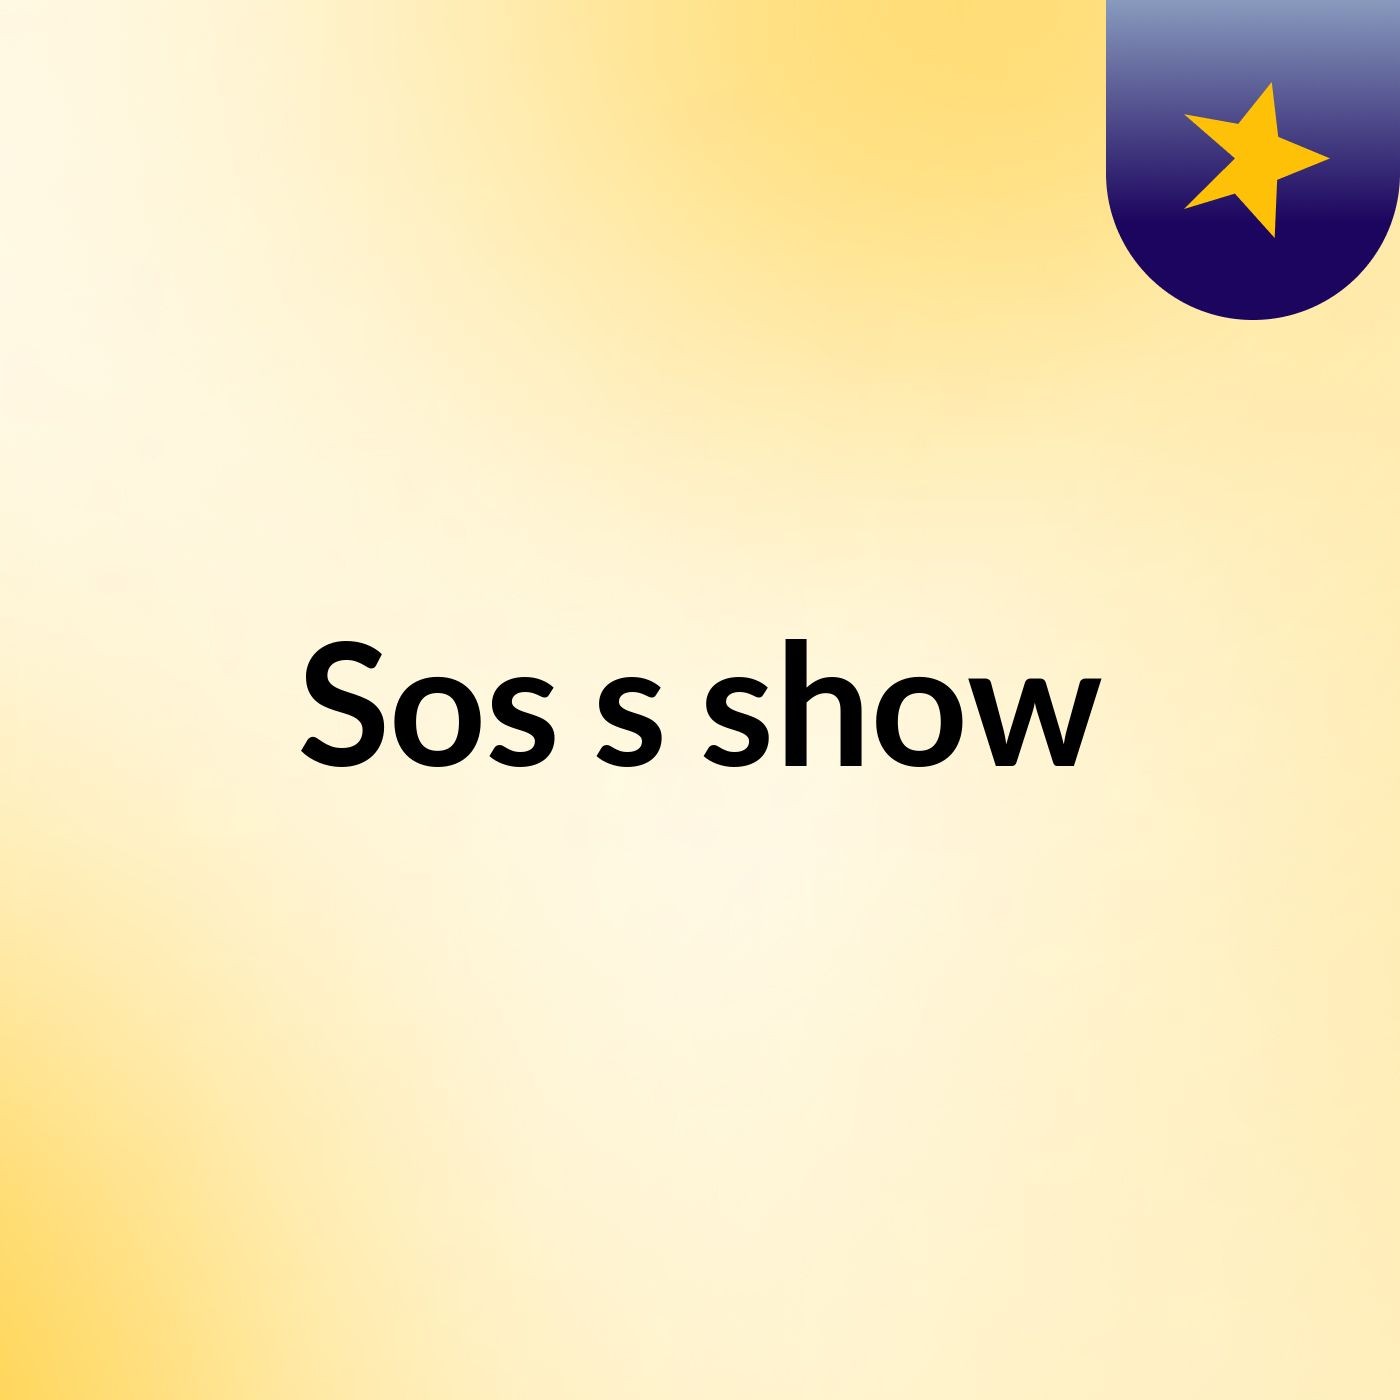 Sos's show